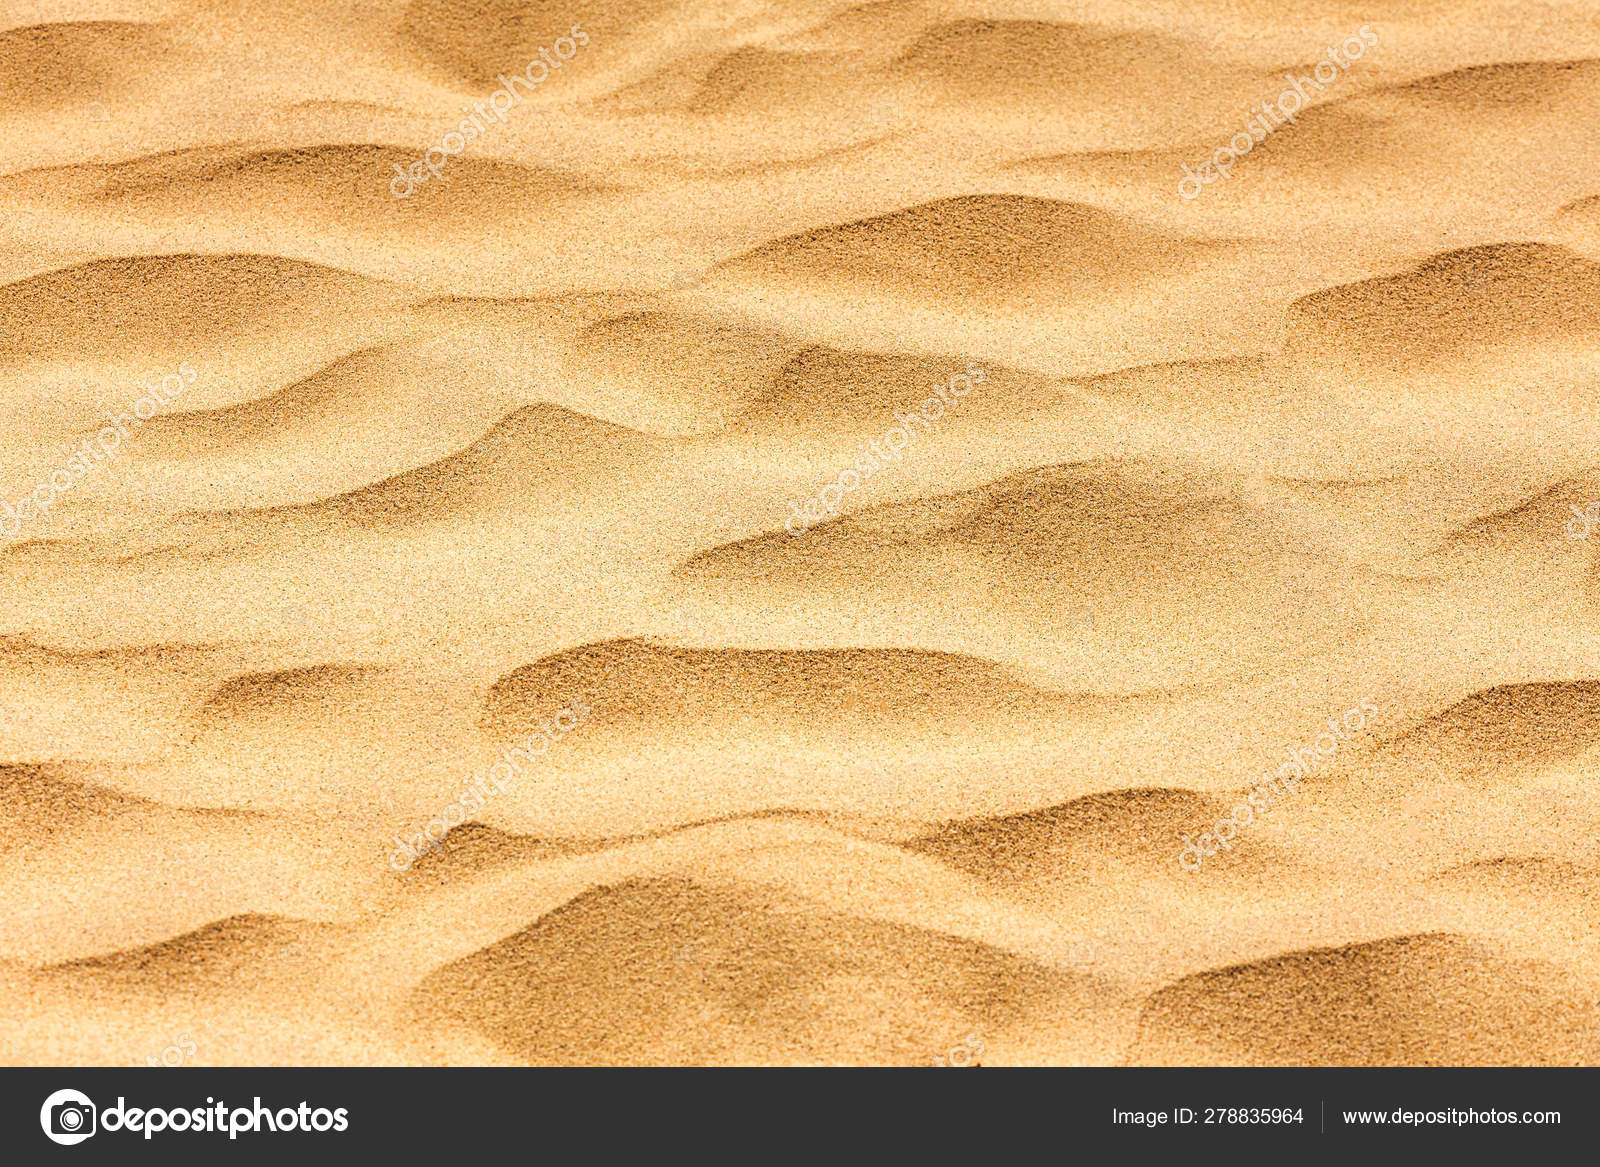 Background Image Of Desert Sand In The Dunes Stock Photo C Ljphoto7 Gmail Com